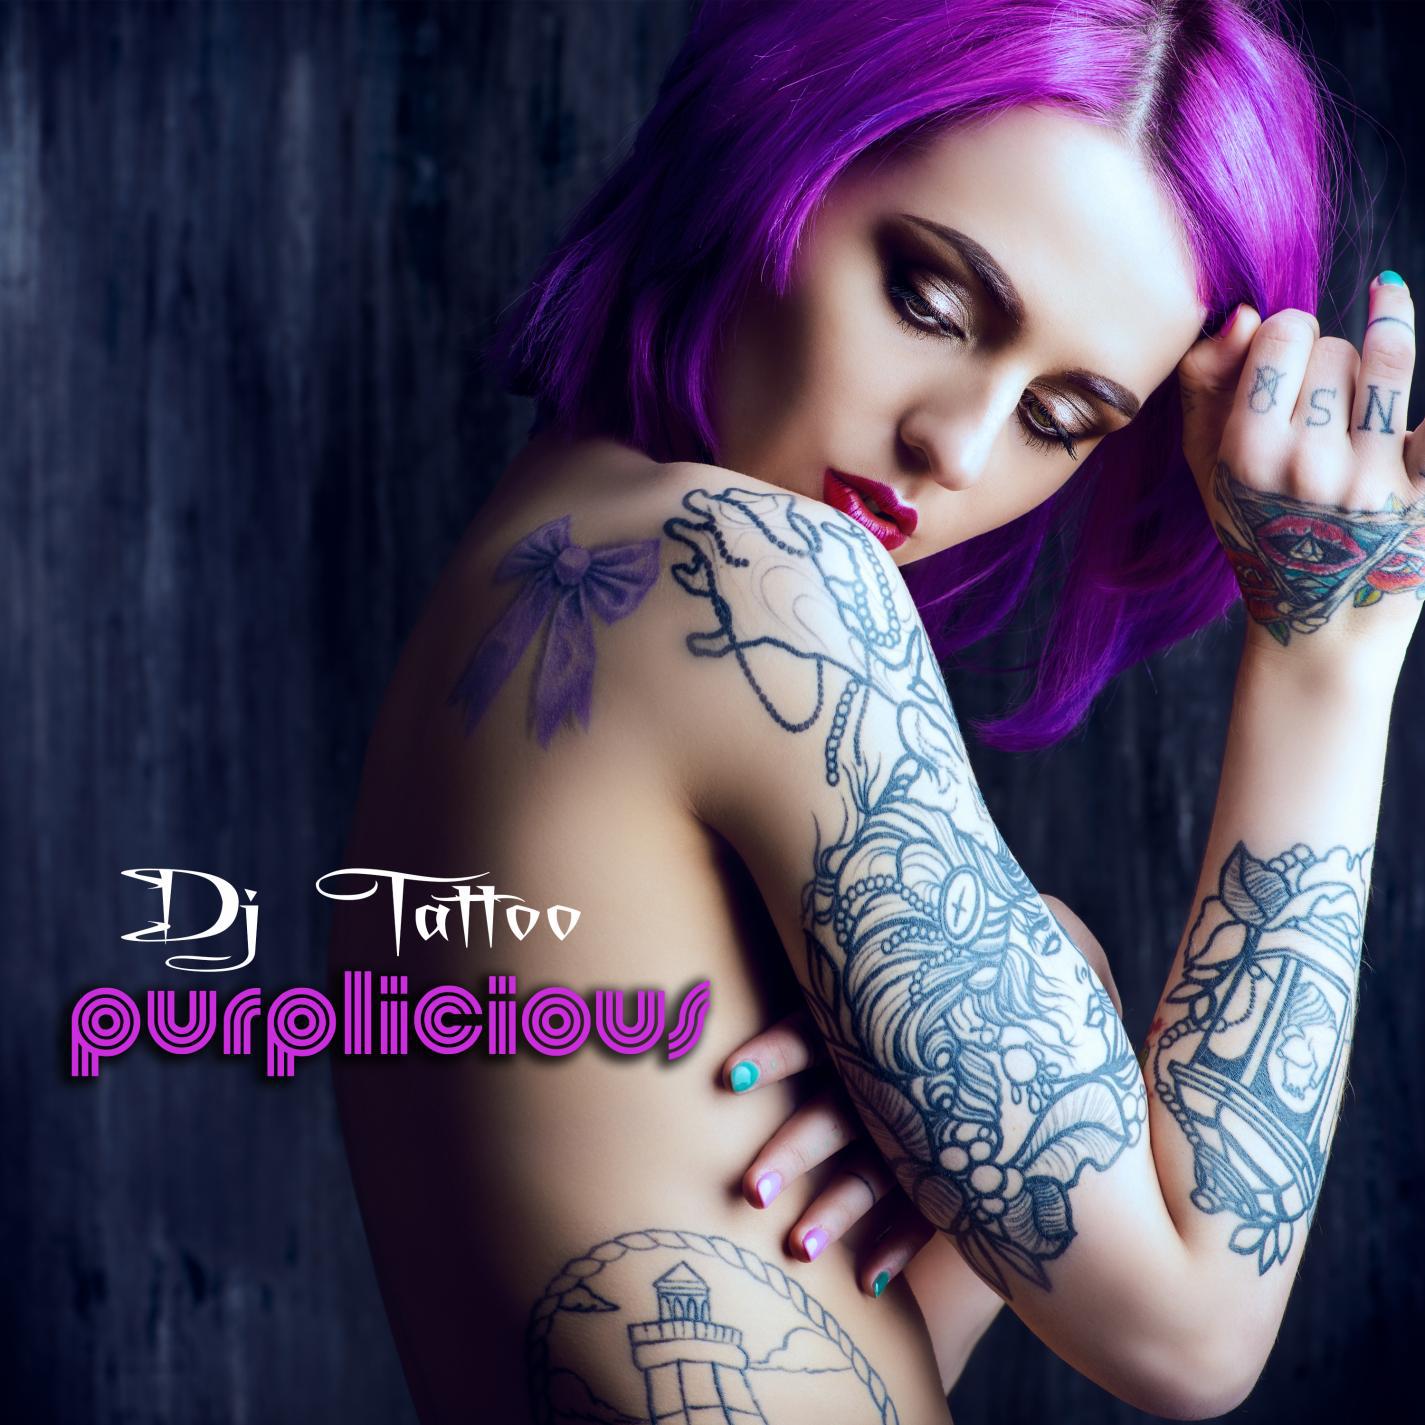 purplicious tattoo